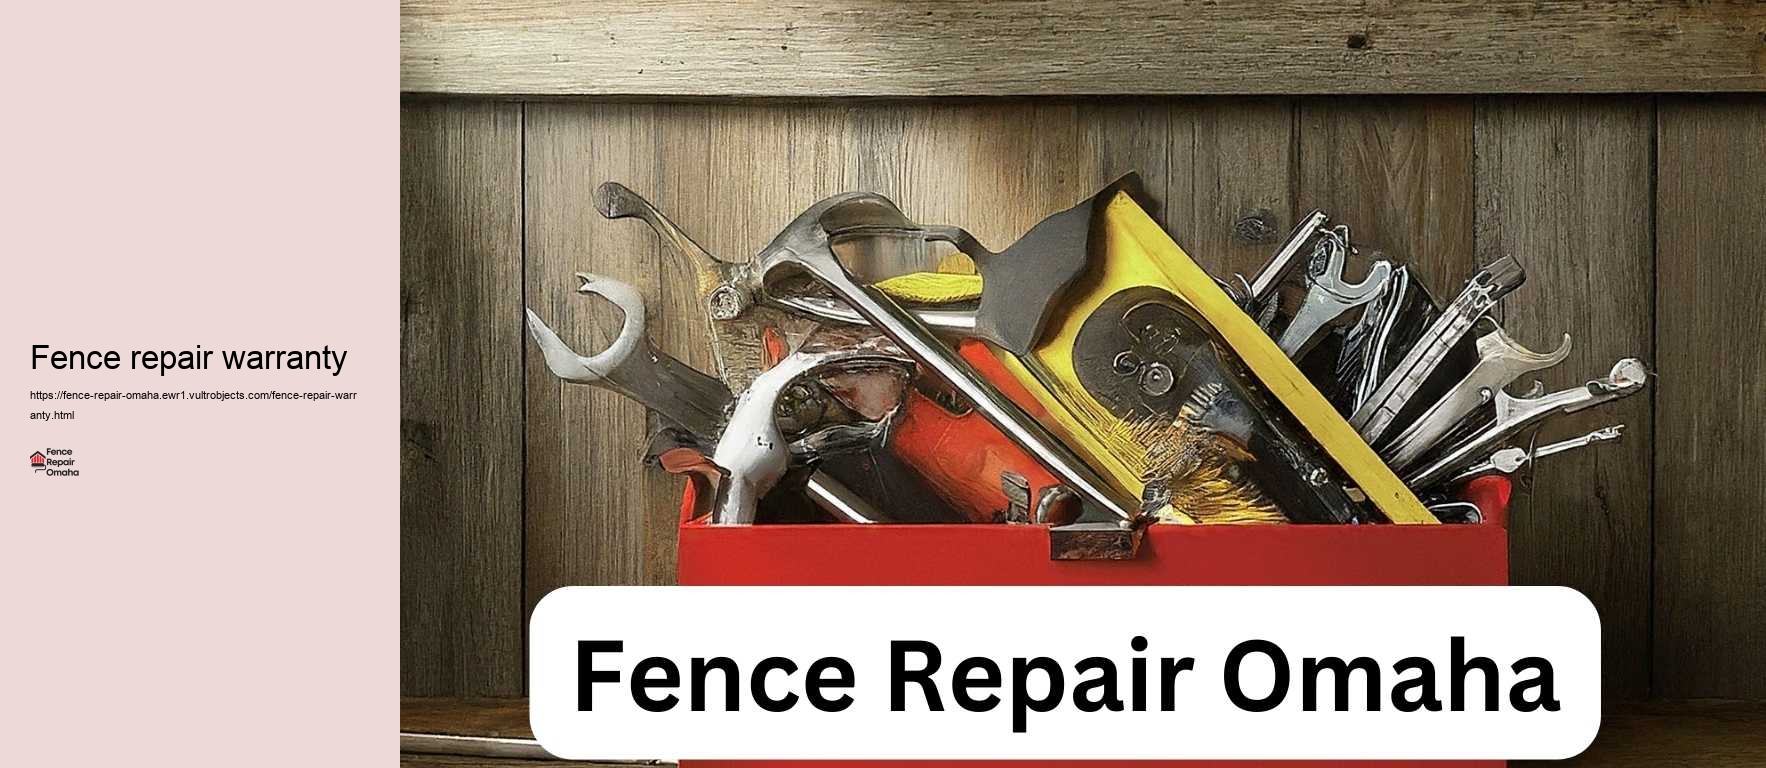 Fence repair warranty